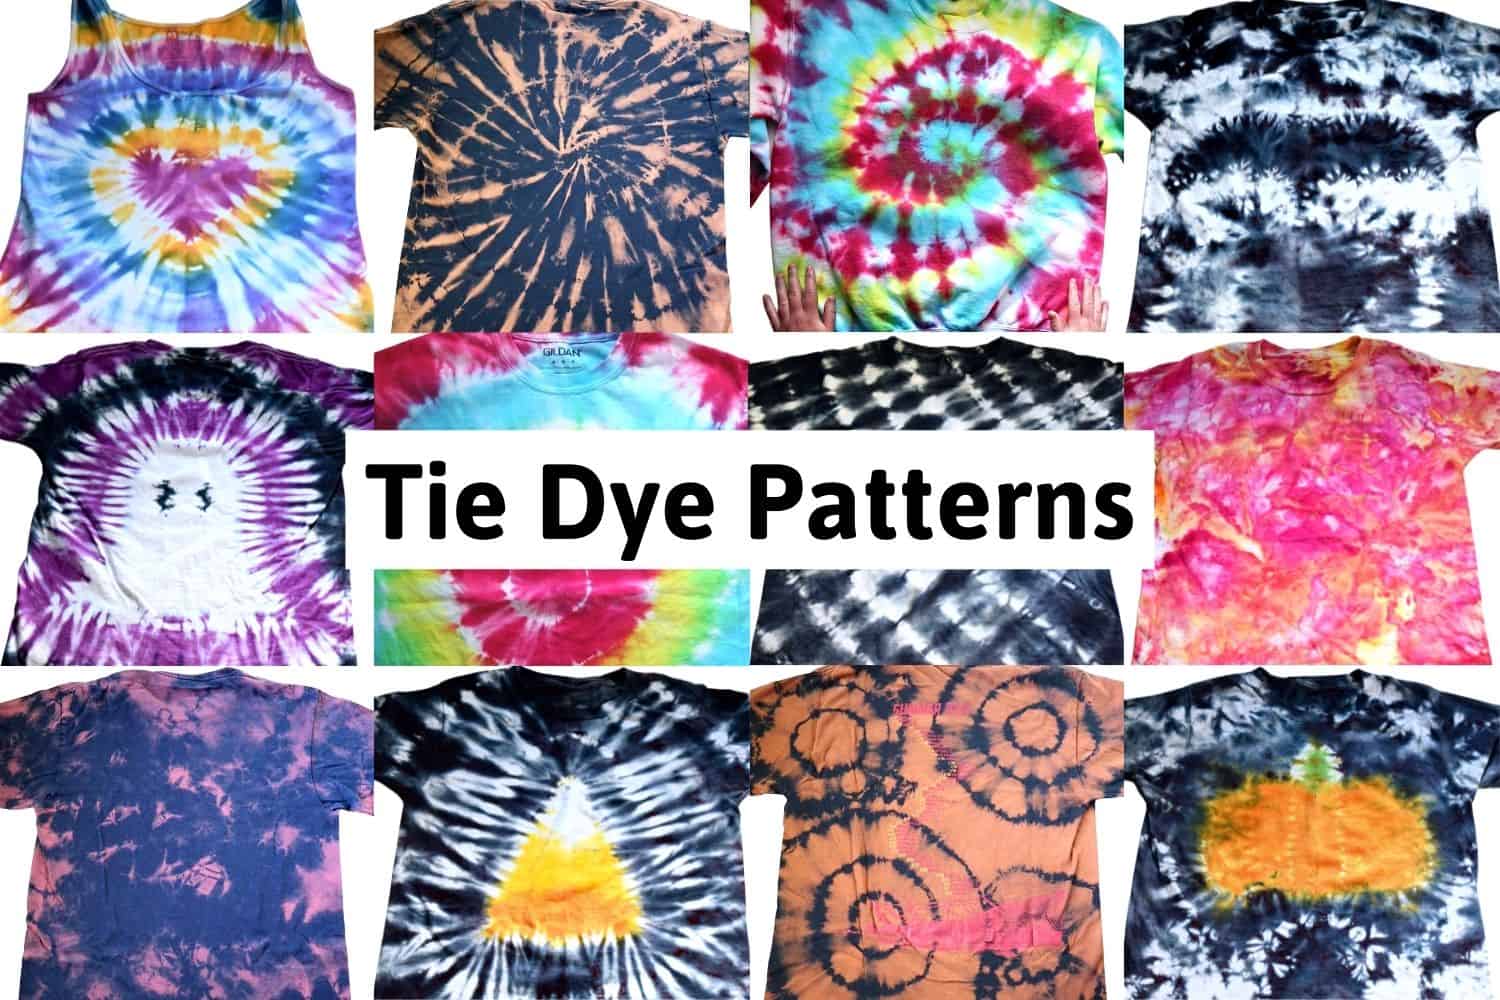 Top 5 TIE-DYE T-shirt amazing patterns! 